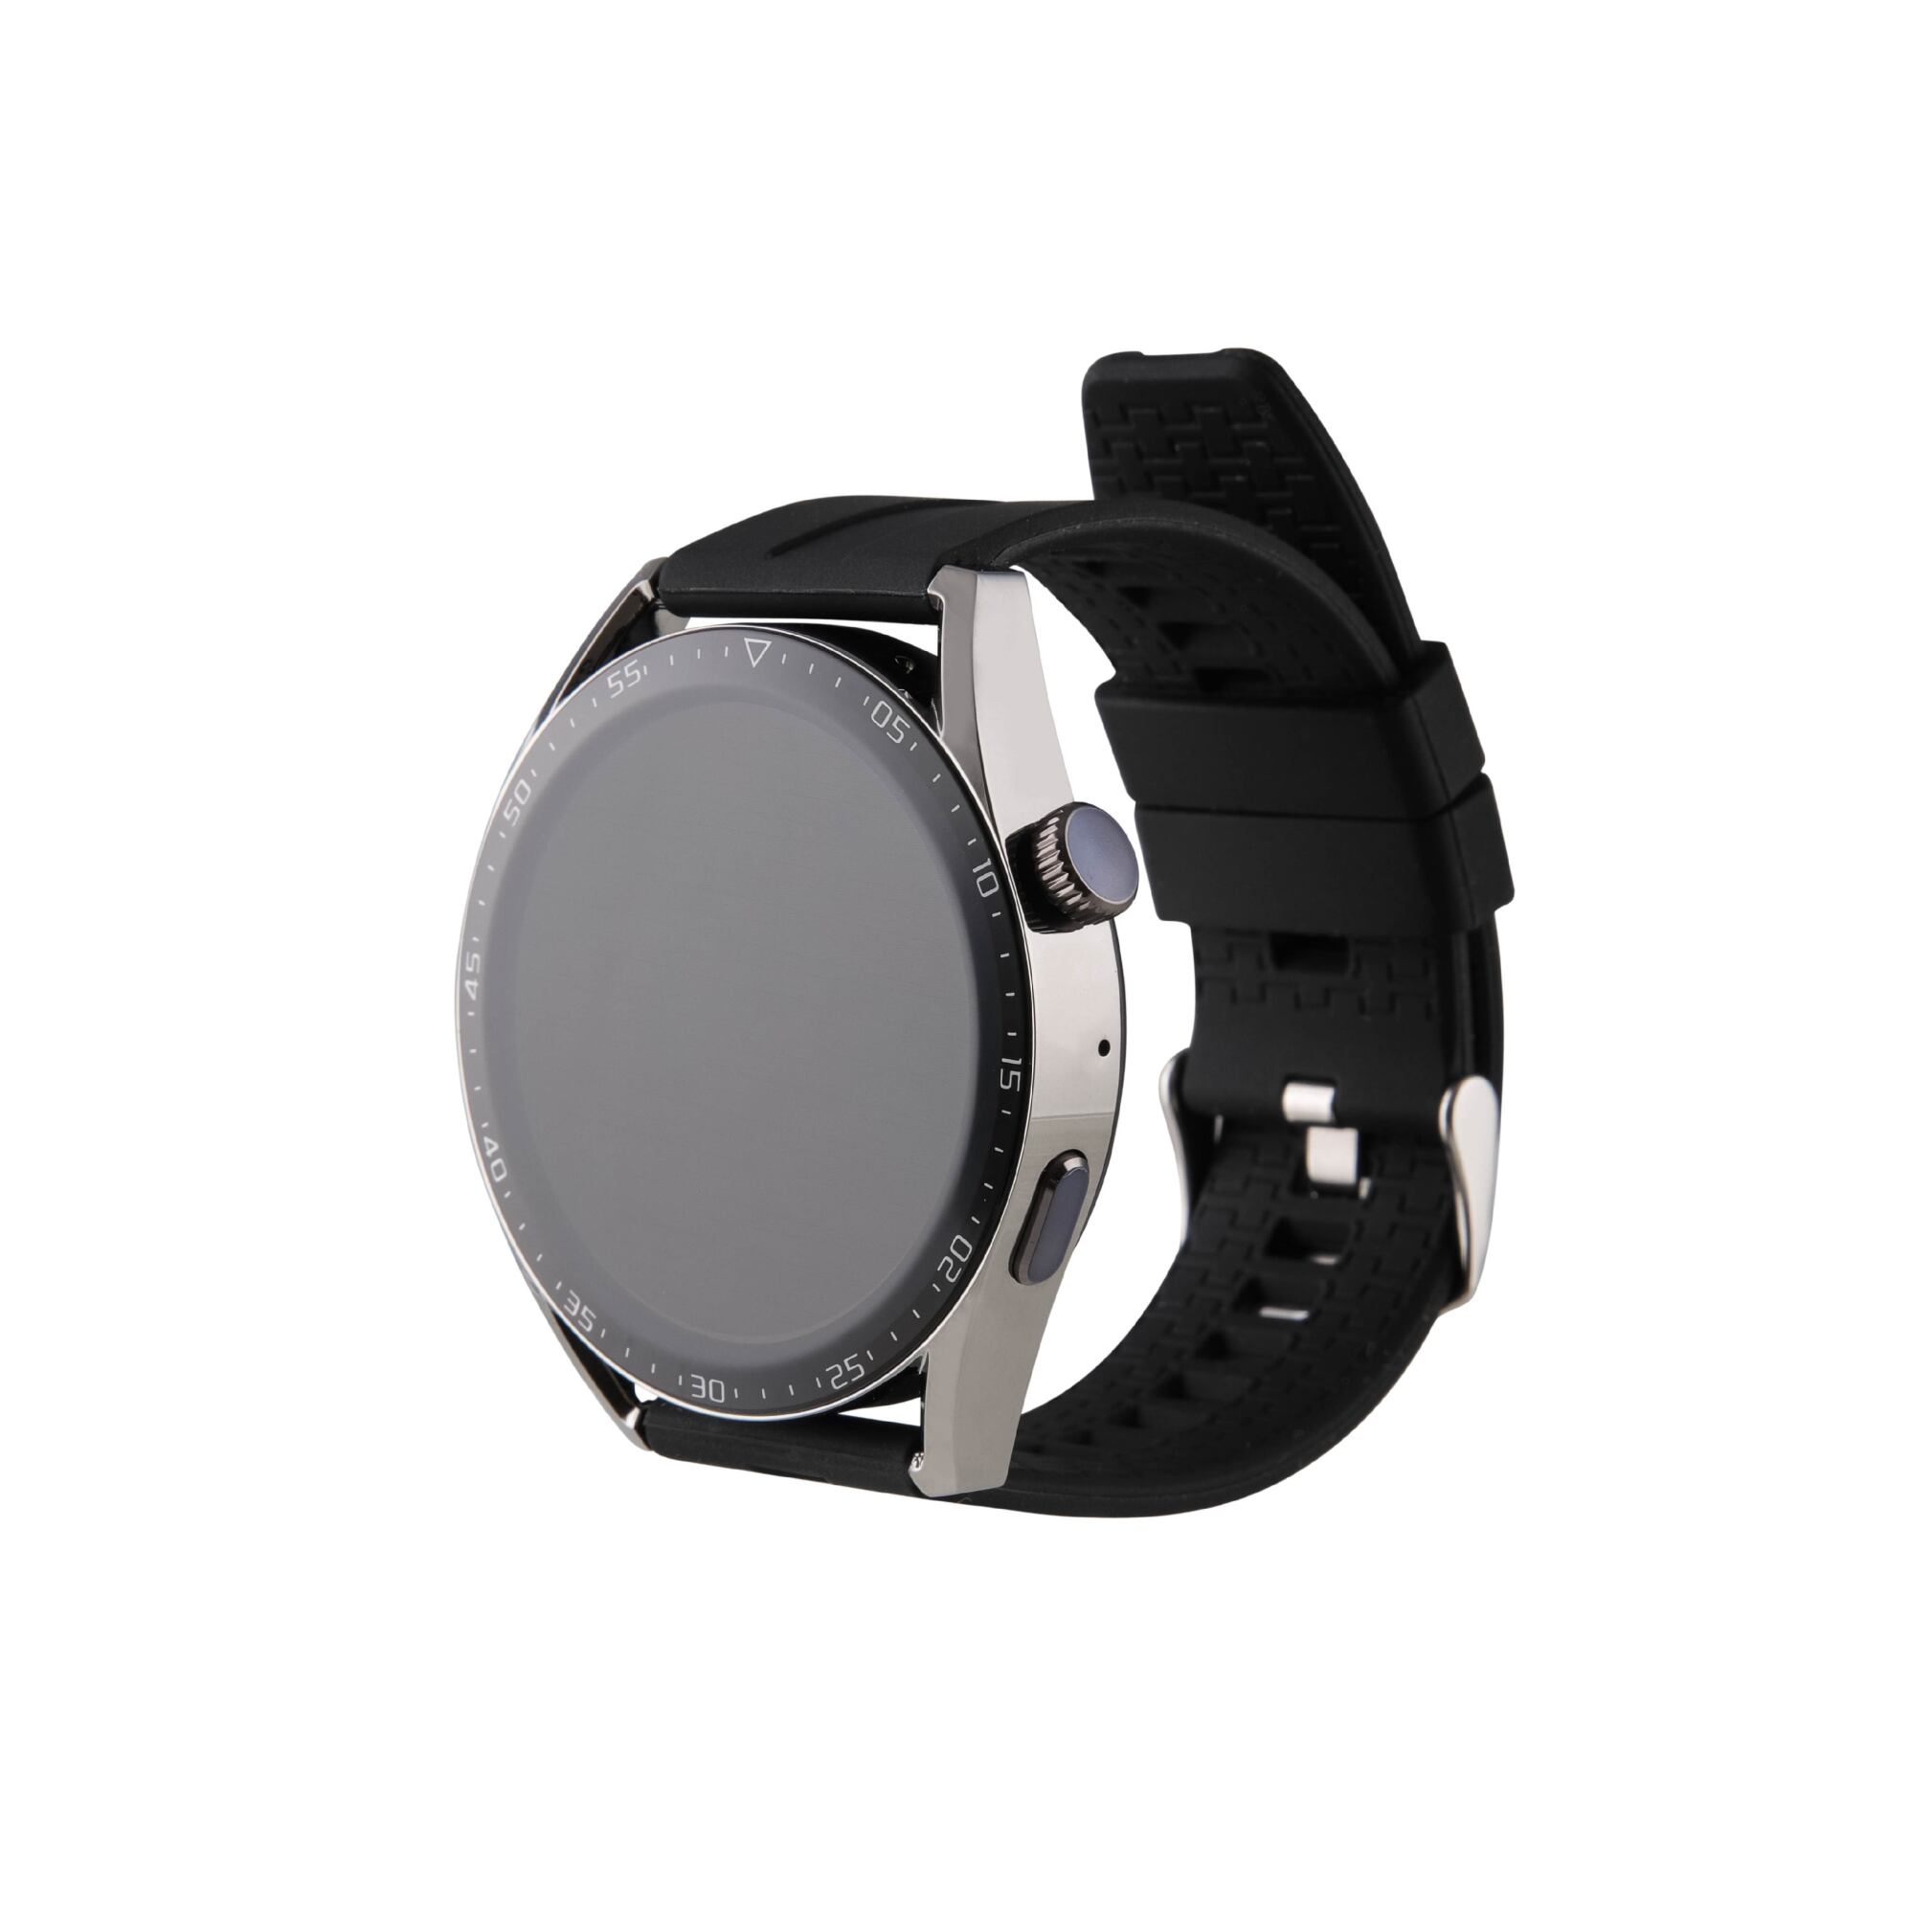  ساعت هوشمند سانرایز مدل watch 3 